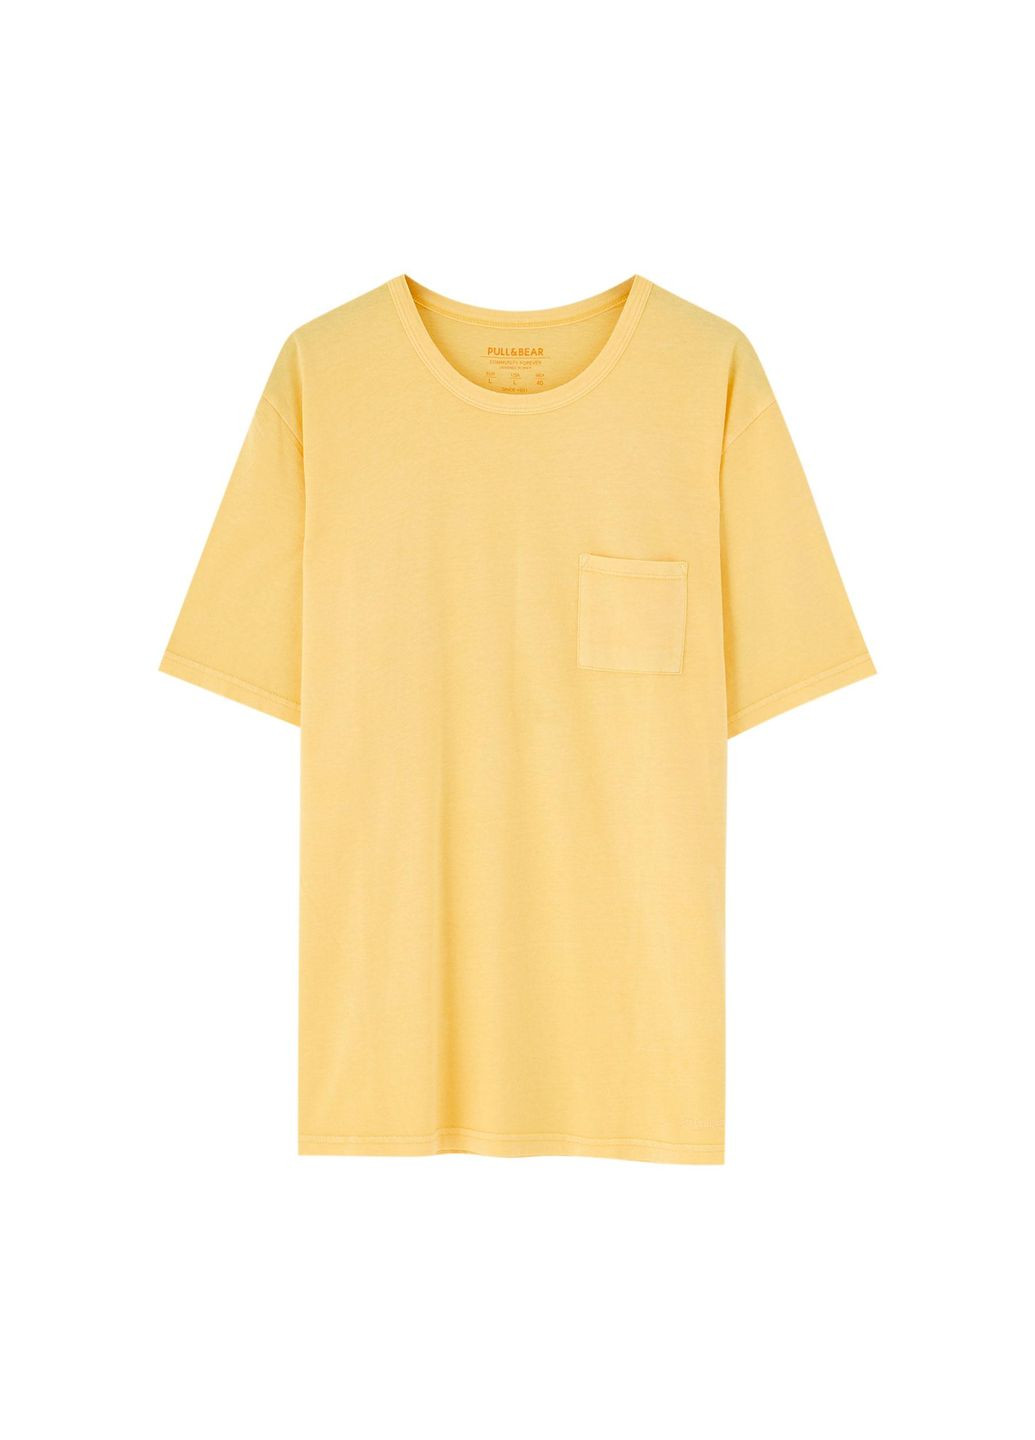 Желтая футболка,желтый, Pull & Bear